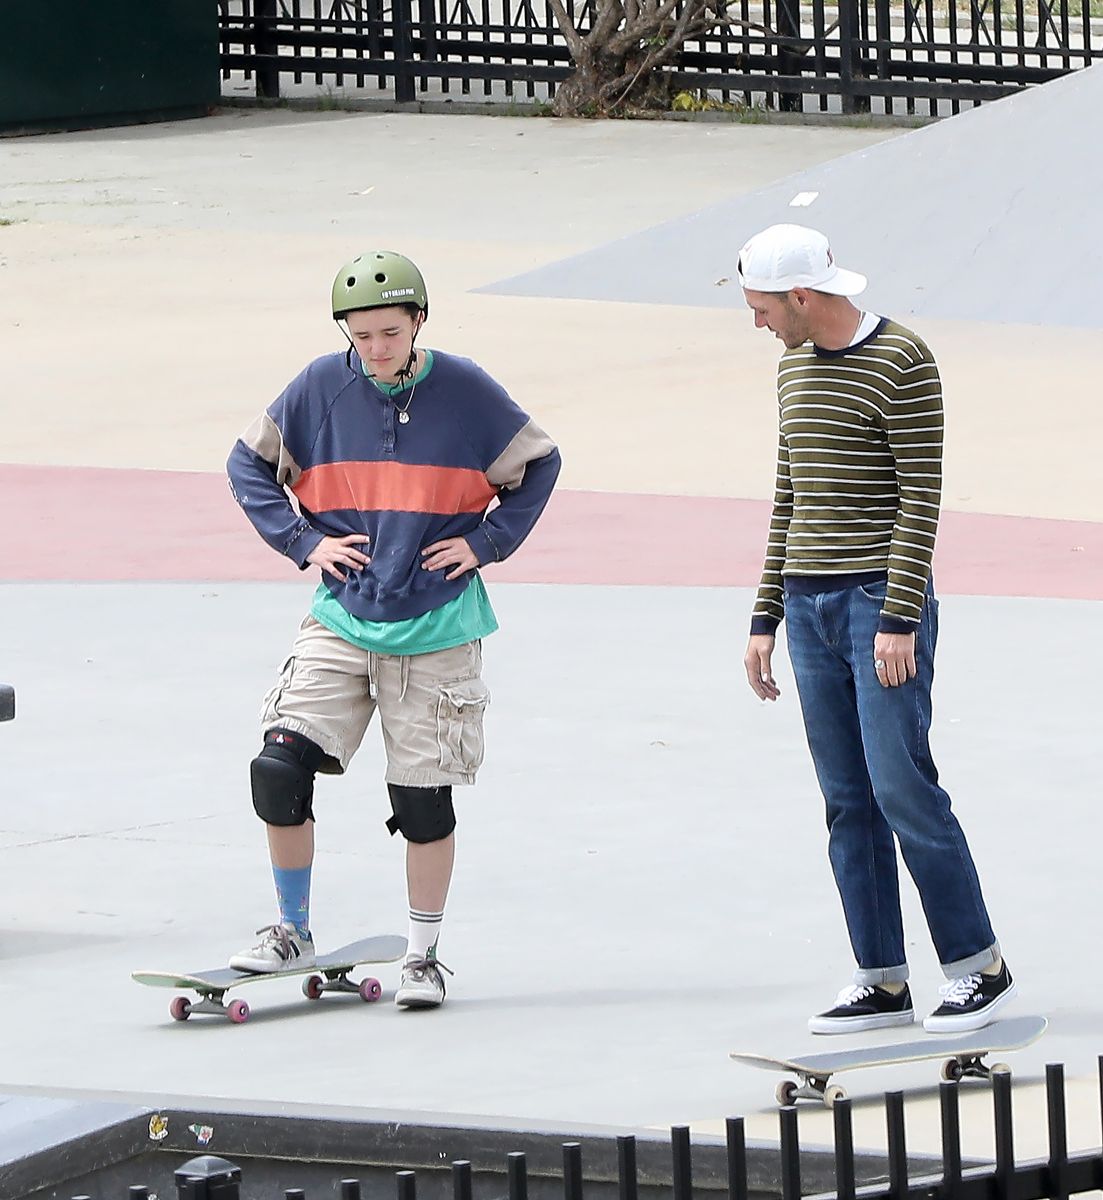 Fin Affleck at the skate park